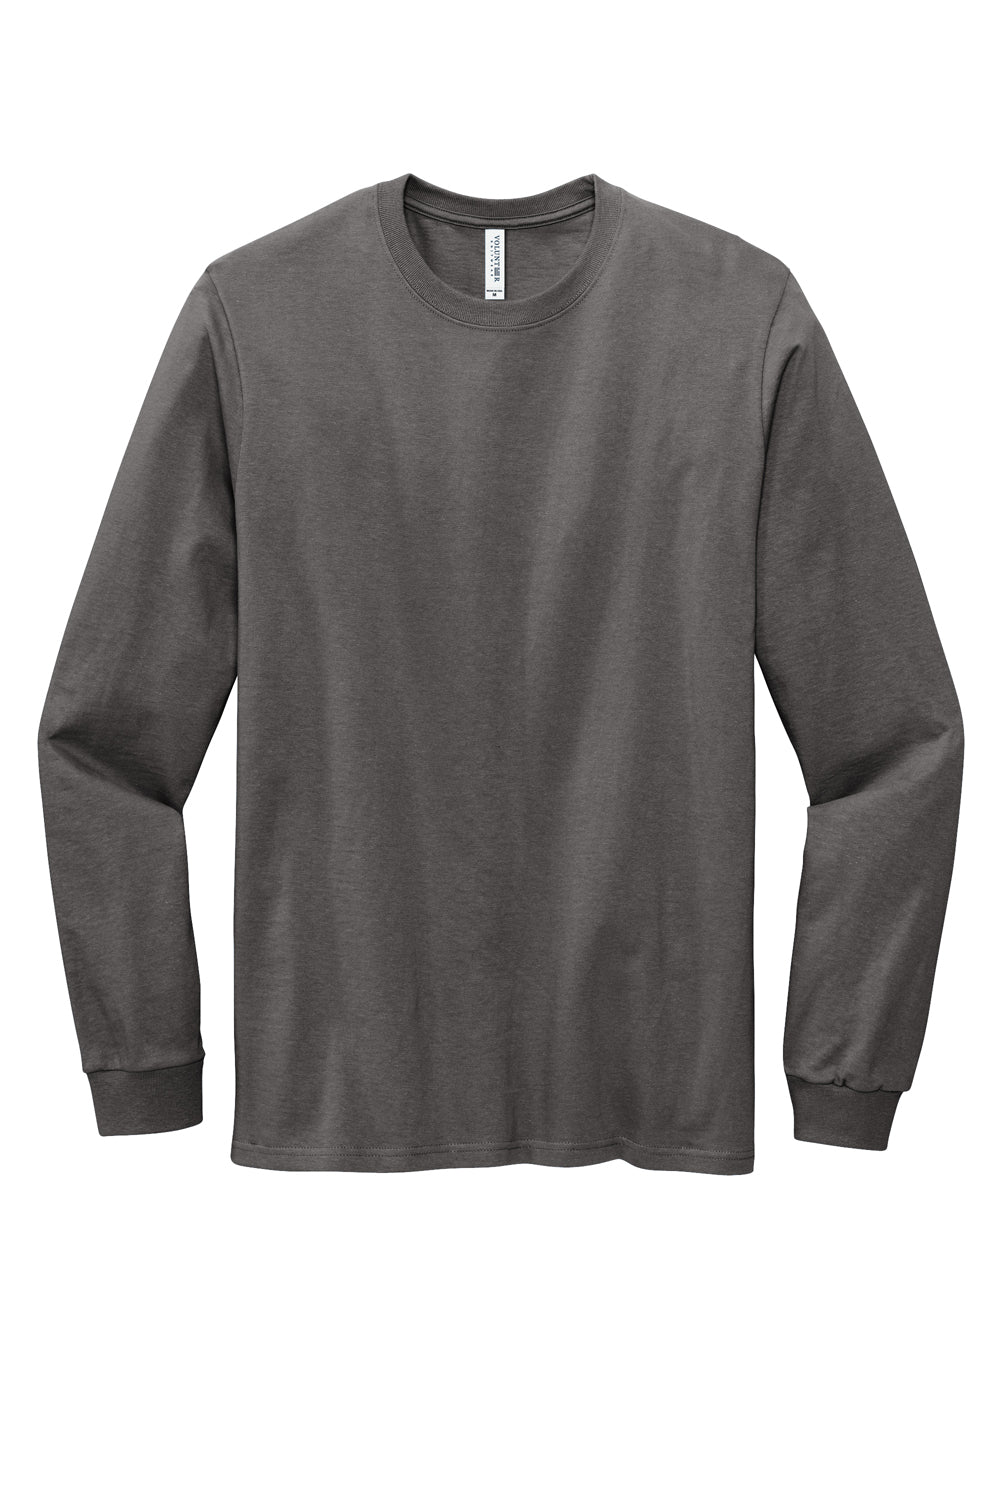 Volunteer Knitwear VL100LS USA Made All American Long Sleeve Crewneck T-Shirts Steel Grey Flat Front